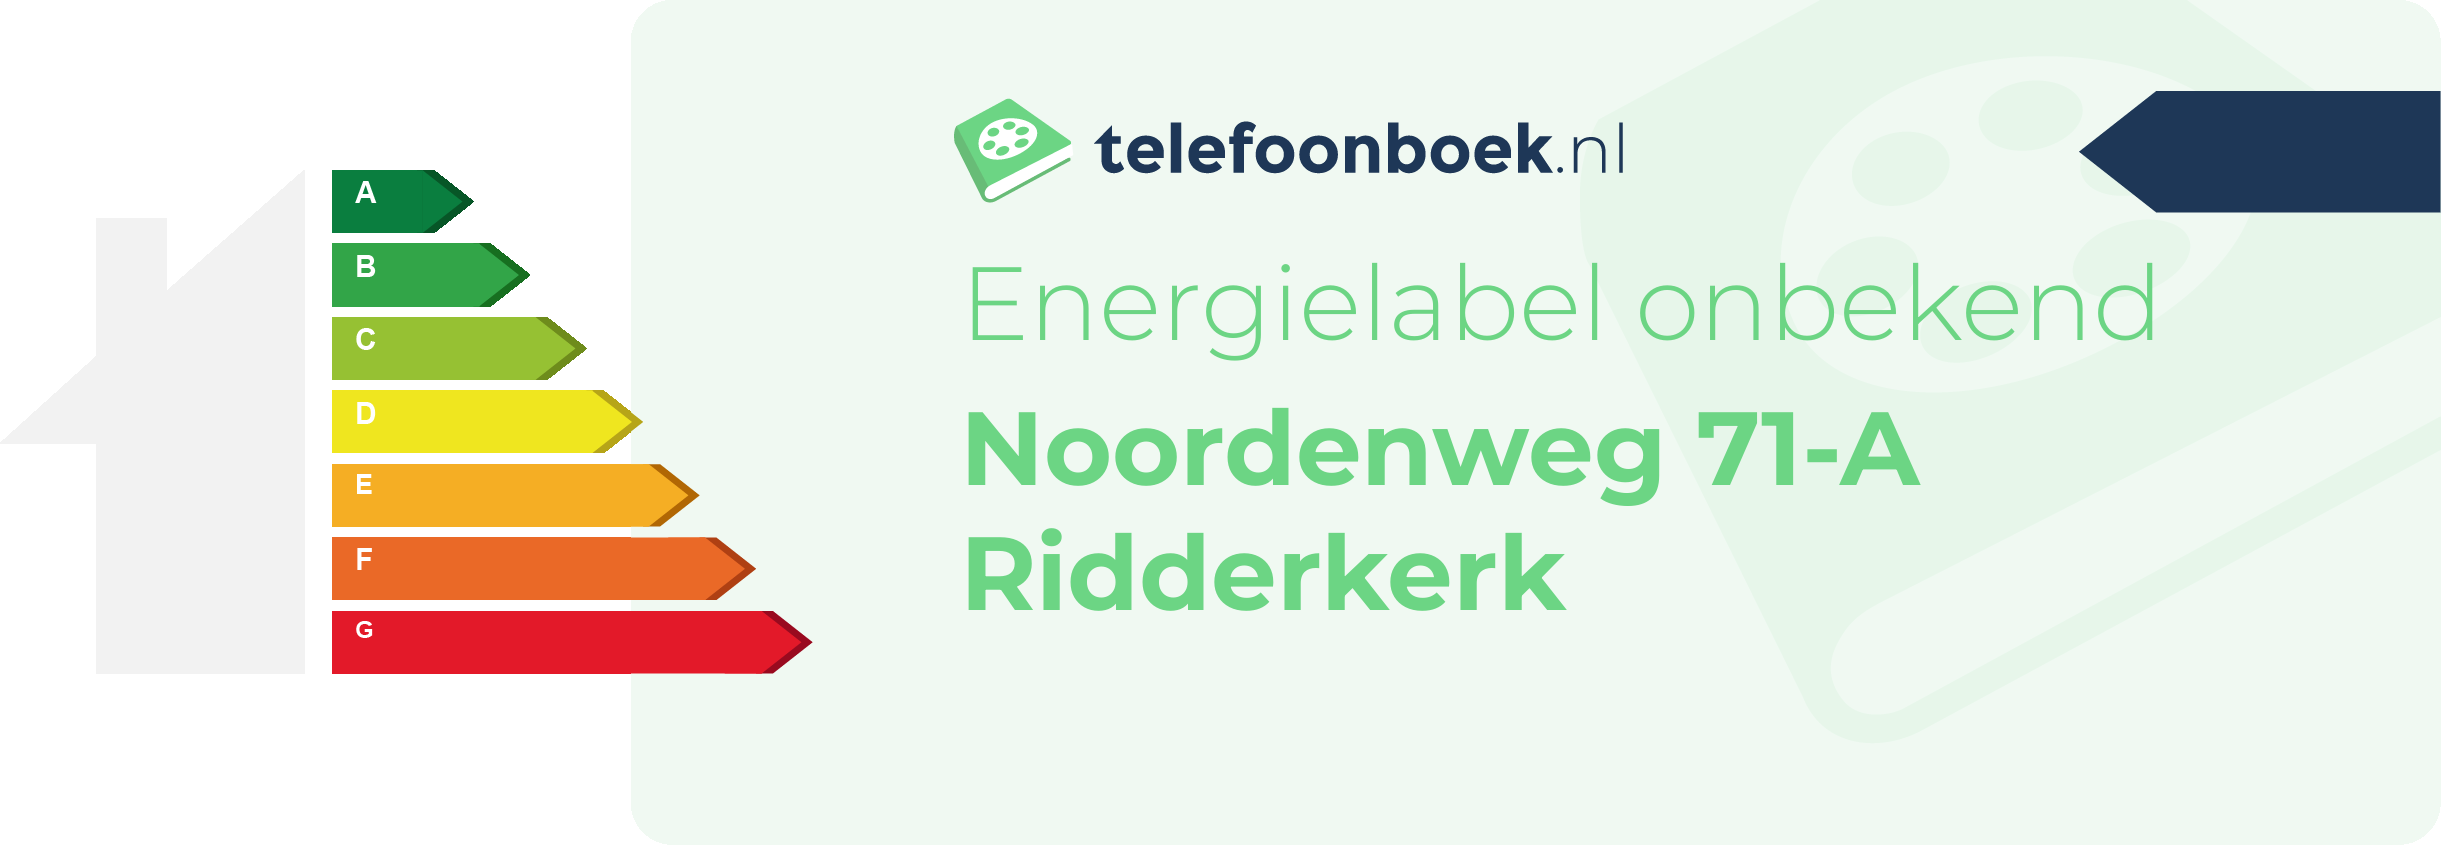 Energielabel Noordenweg 71-A Ridderkerk